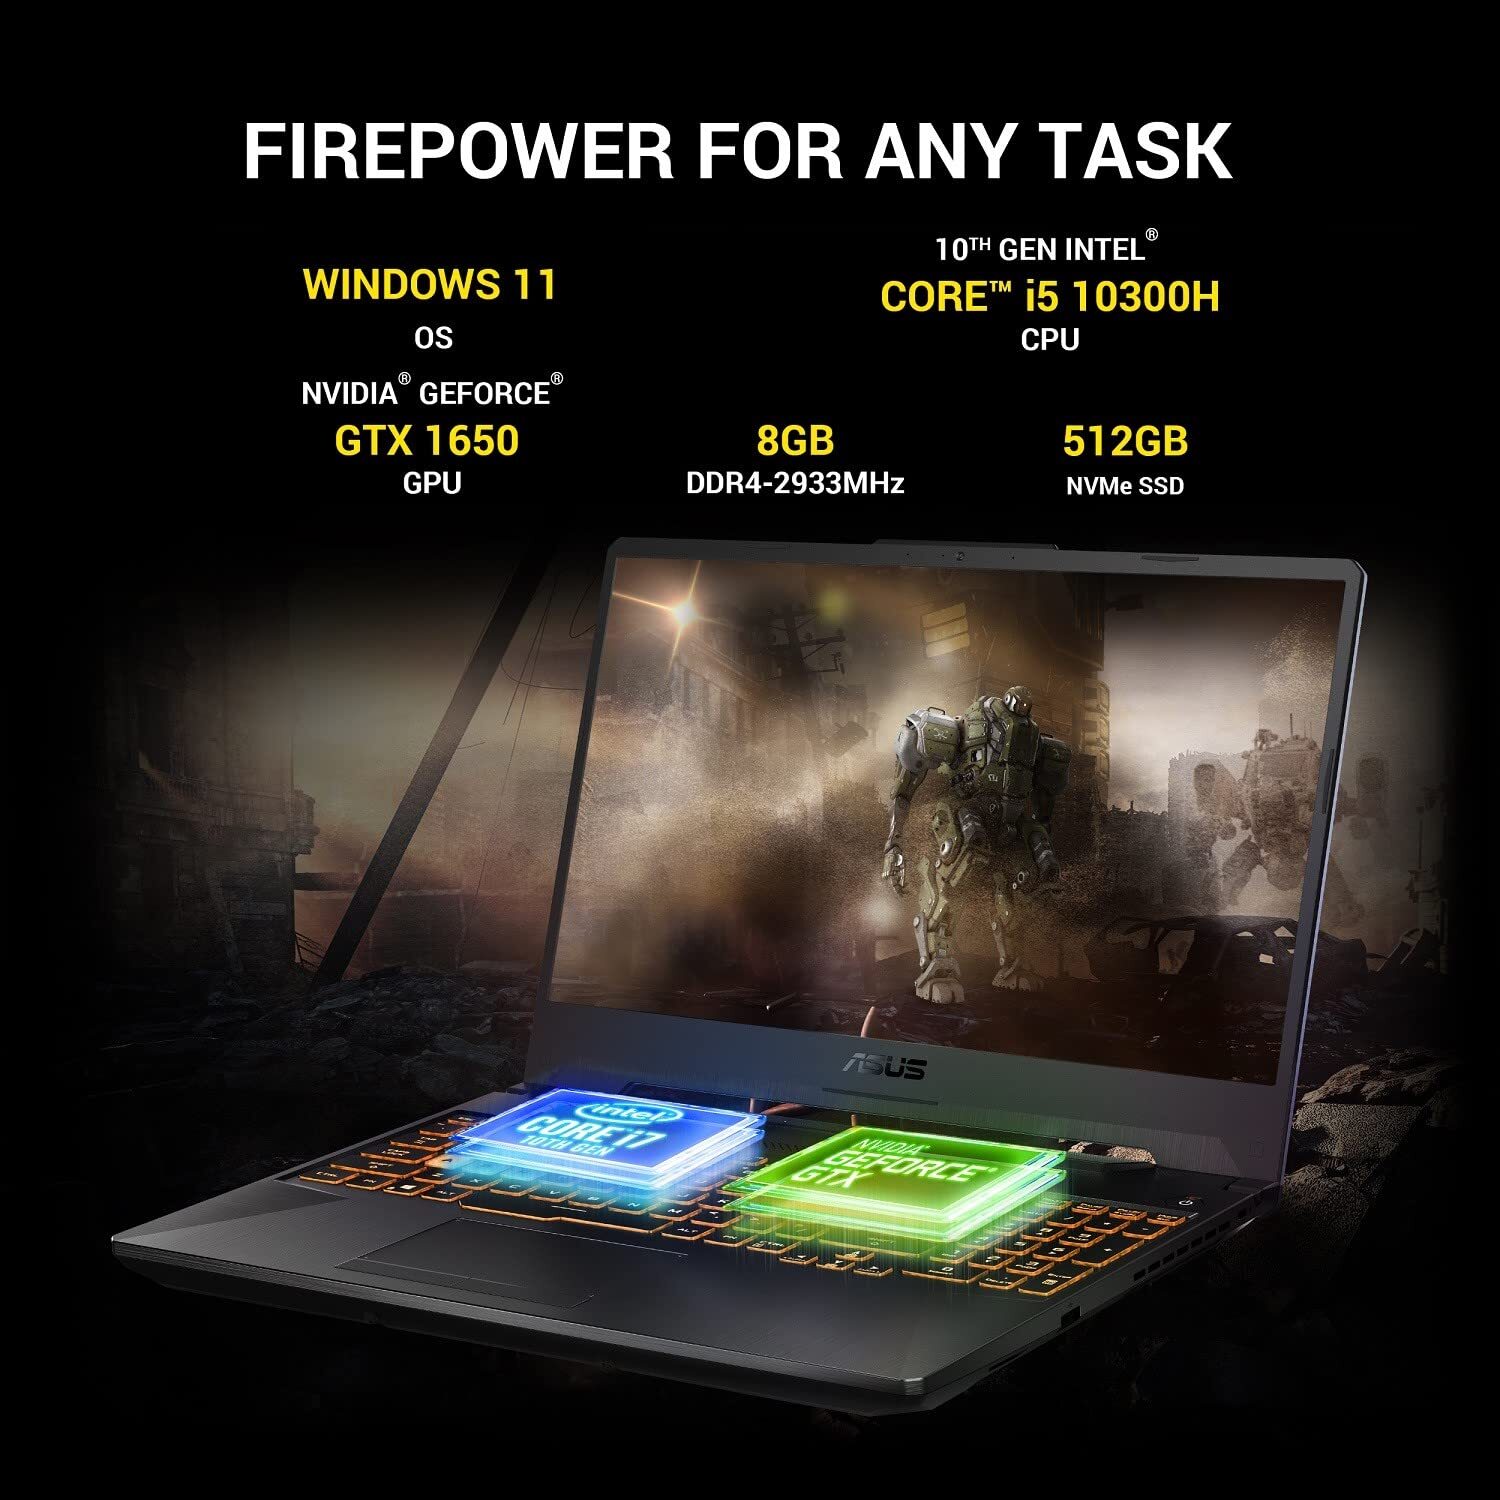 ASUS TUF Gaming F15, 15.6-inch (39.62 cms) FHD 144Hz, Intel Core i5-10300H 10th Gen, 4GB NVIDIA GeForce GTX 1650, Gaming Laptop (8GB/512GB SSD/Windows 11/Office H&S/Black/2.3 Kg), FX506LHB-HN355WS